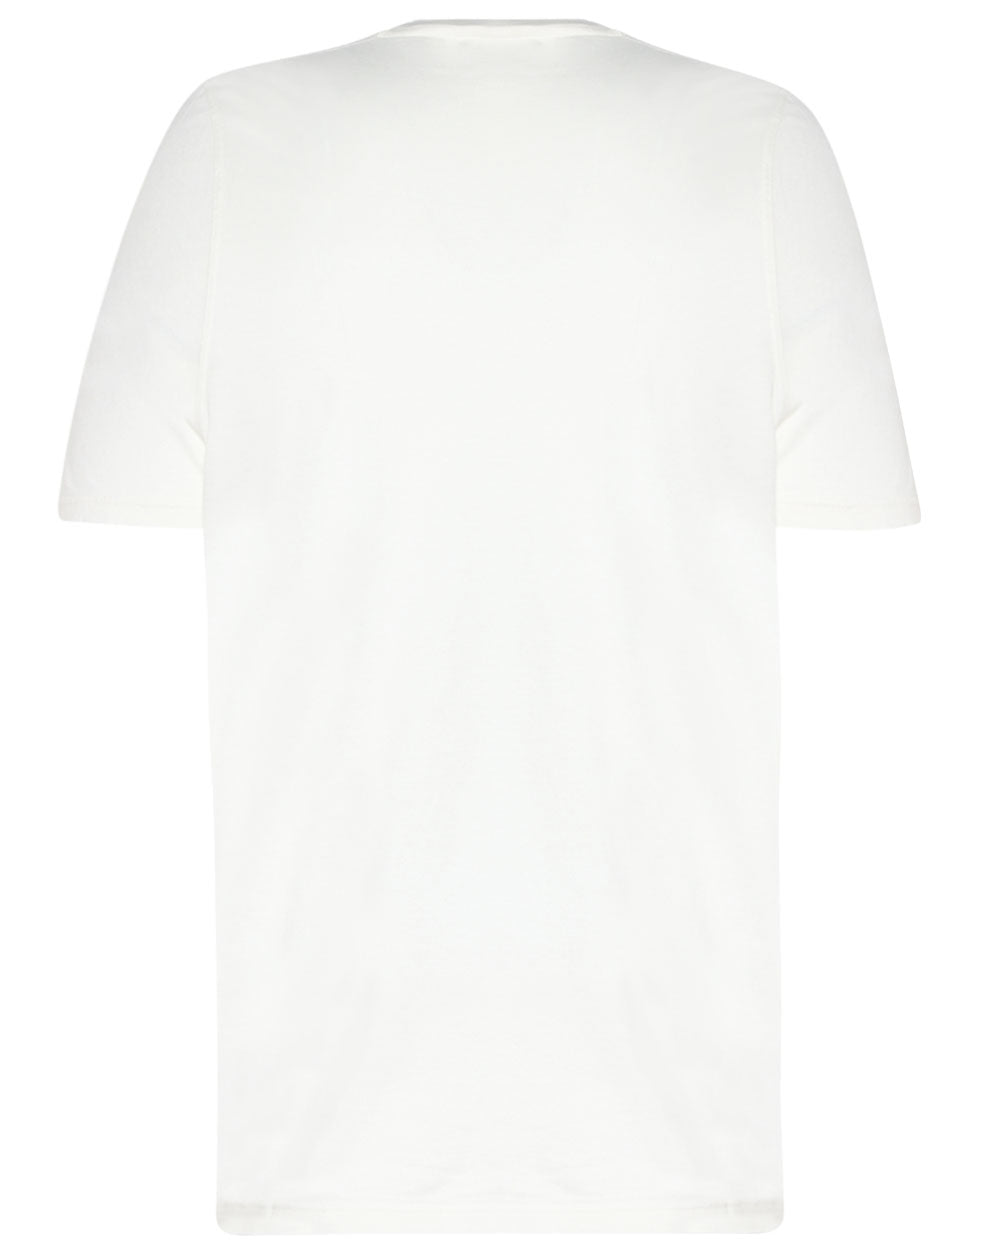 Off White Cotton Blend Short Sleeve T-Shirt